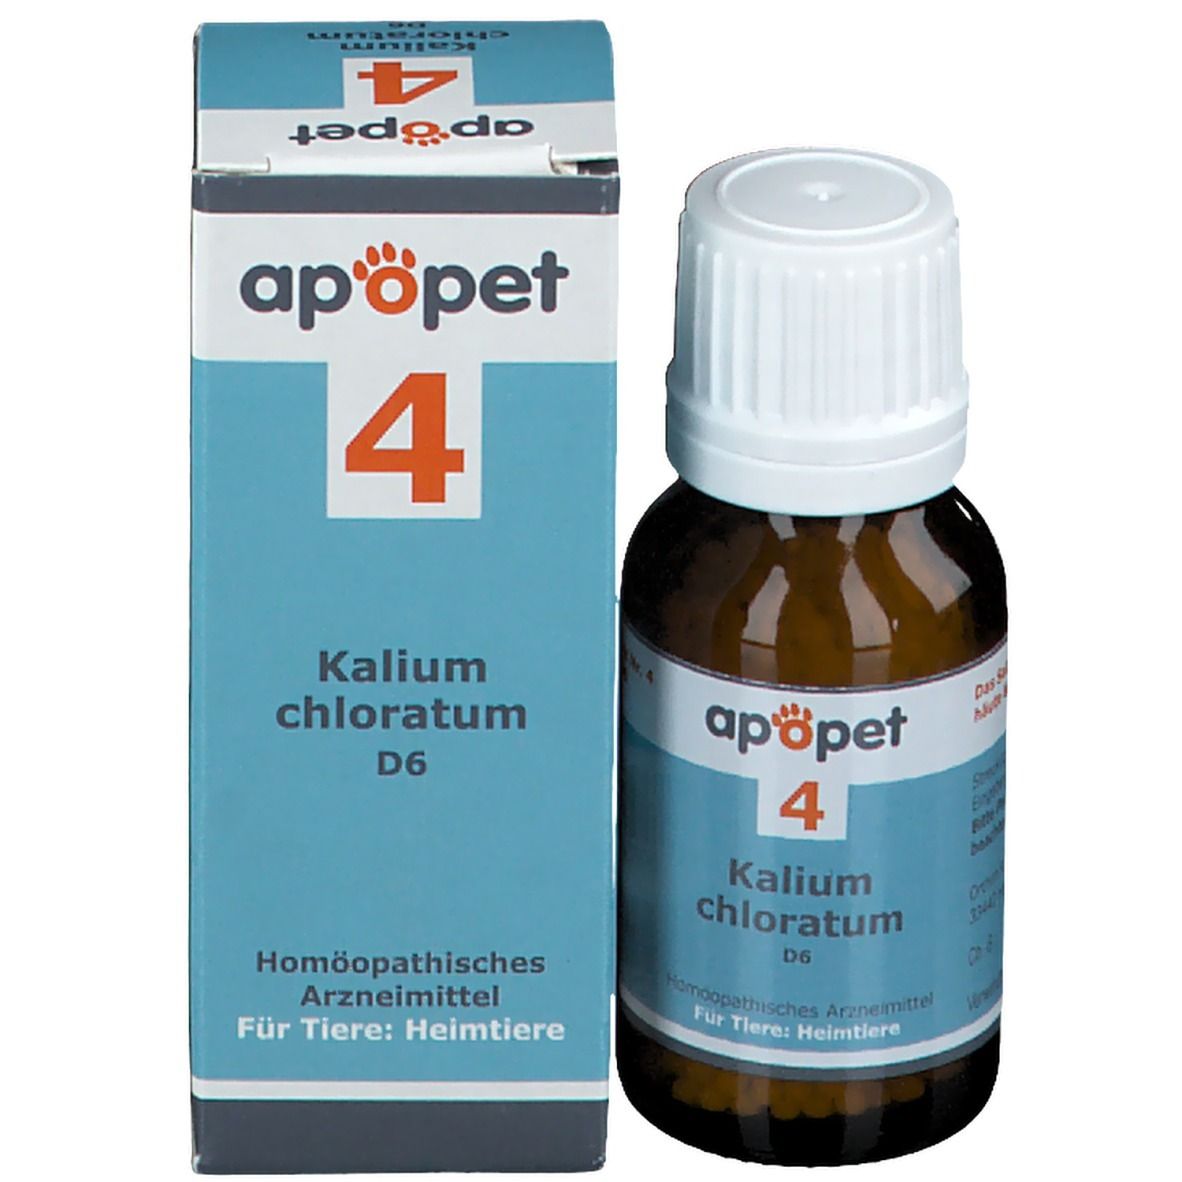 apopet® Schüßler Salz Nr. 4 Kalium chloratum D6 ad us. vet.